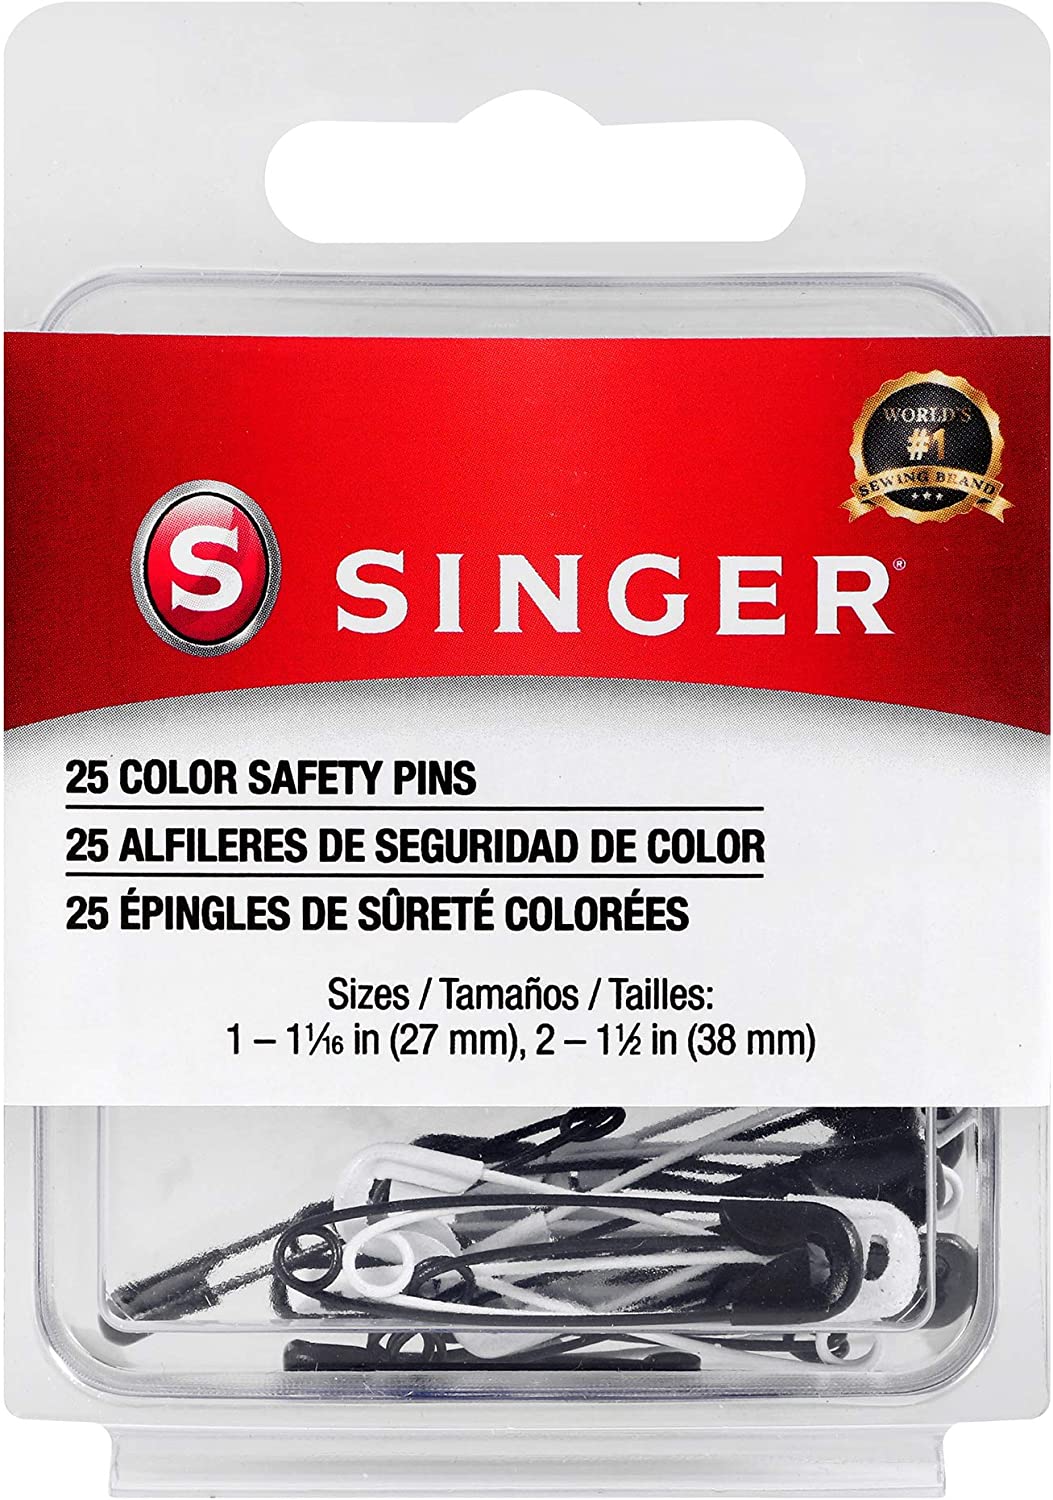 SINGER 00296 Standard Black & White Safety Pins, 25-Pack